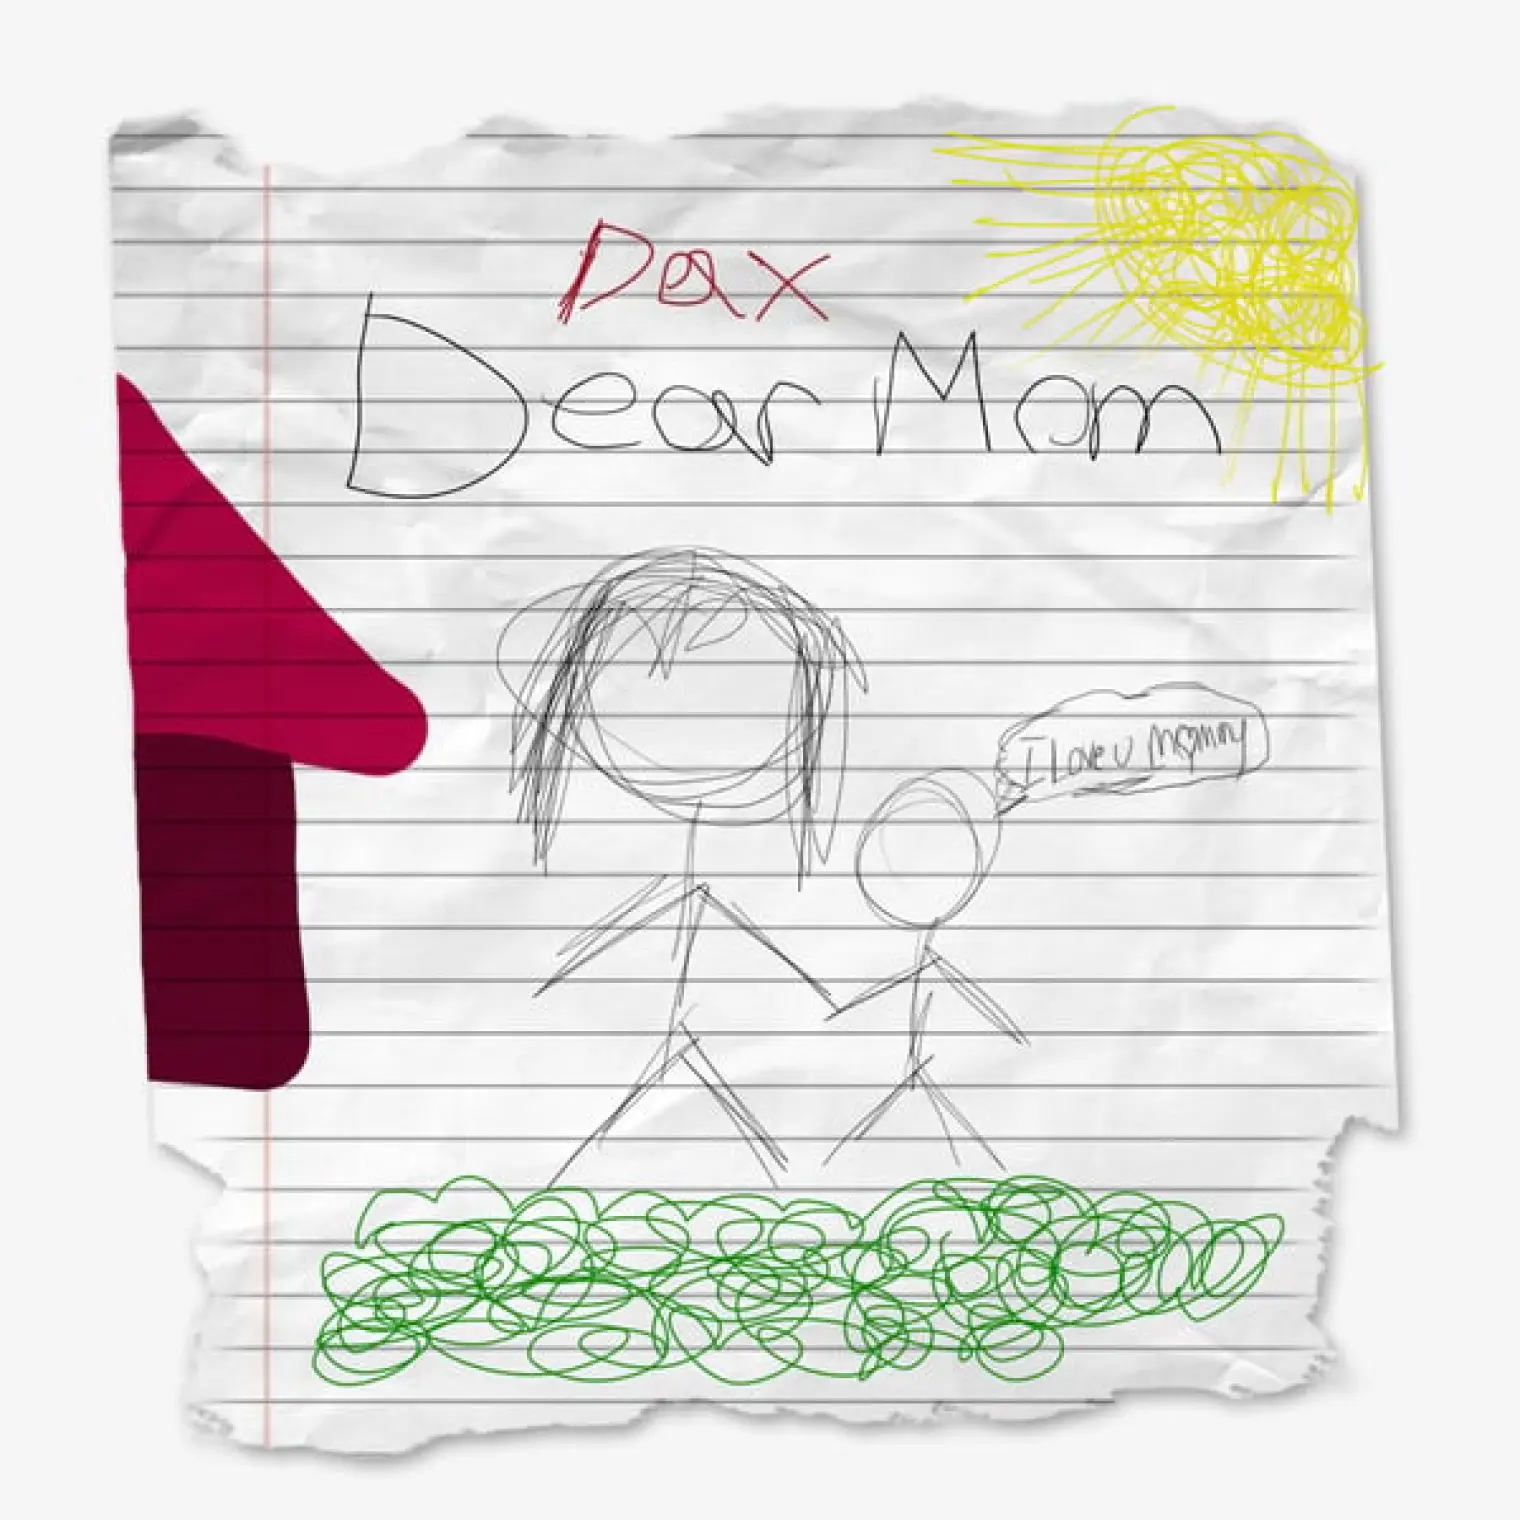 Dear Mom -  Dax 